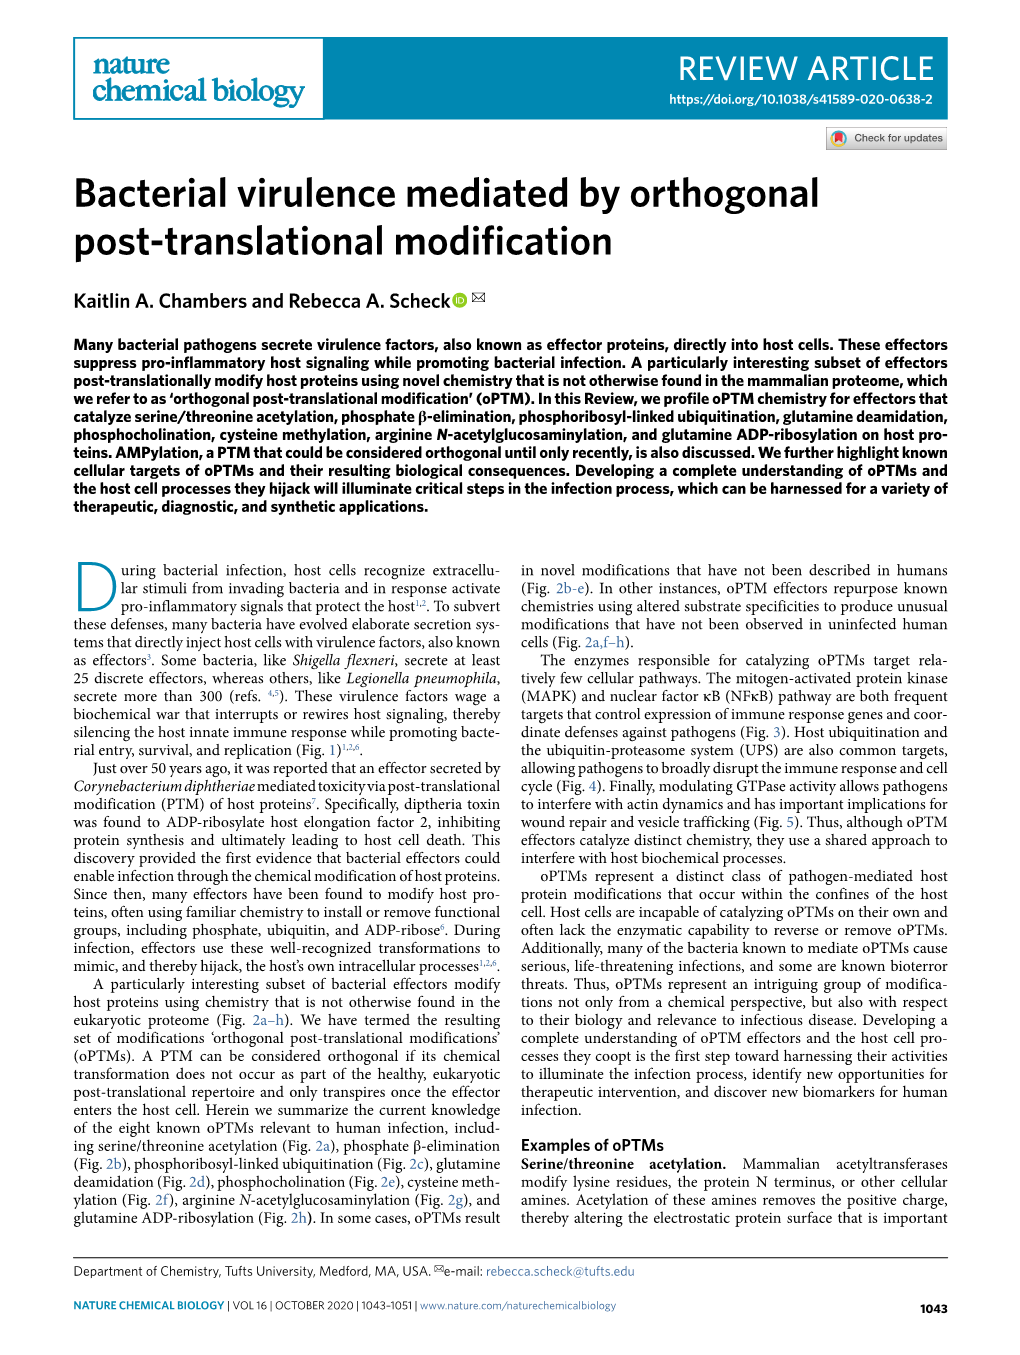 Bacterial Virulence Mediated by Orthogonal Post-Translational Modification